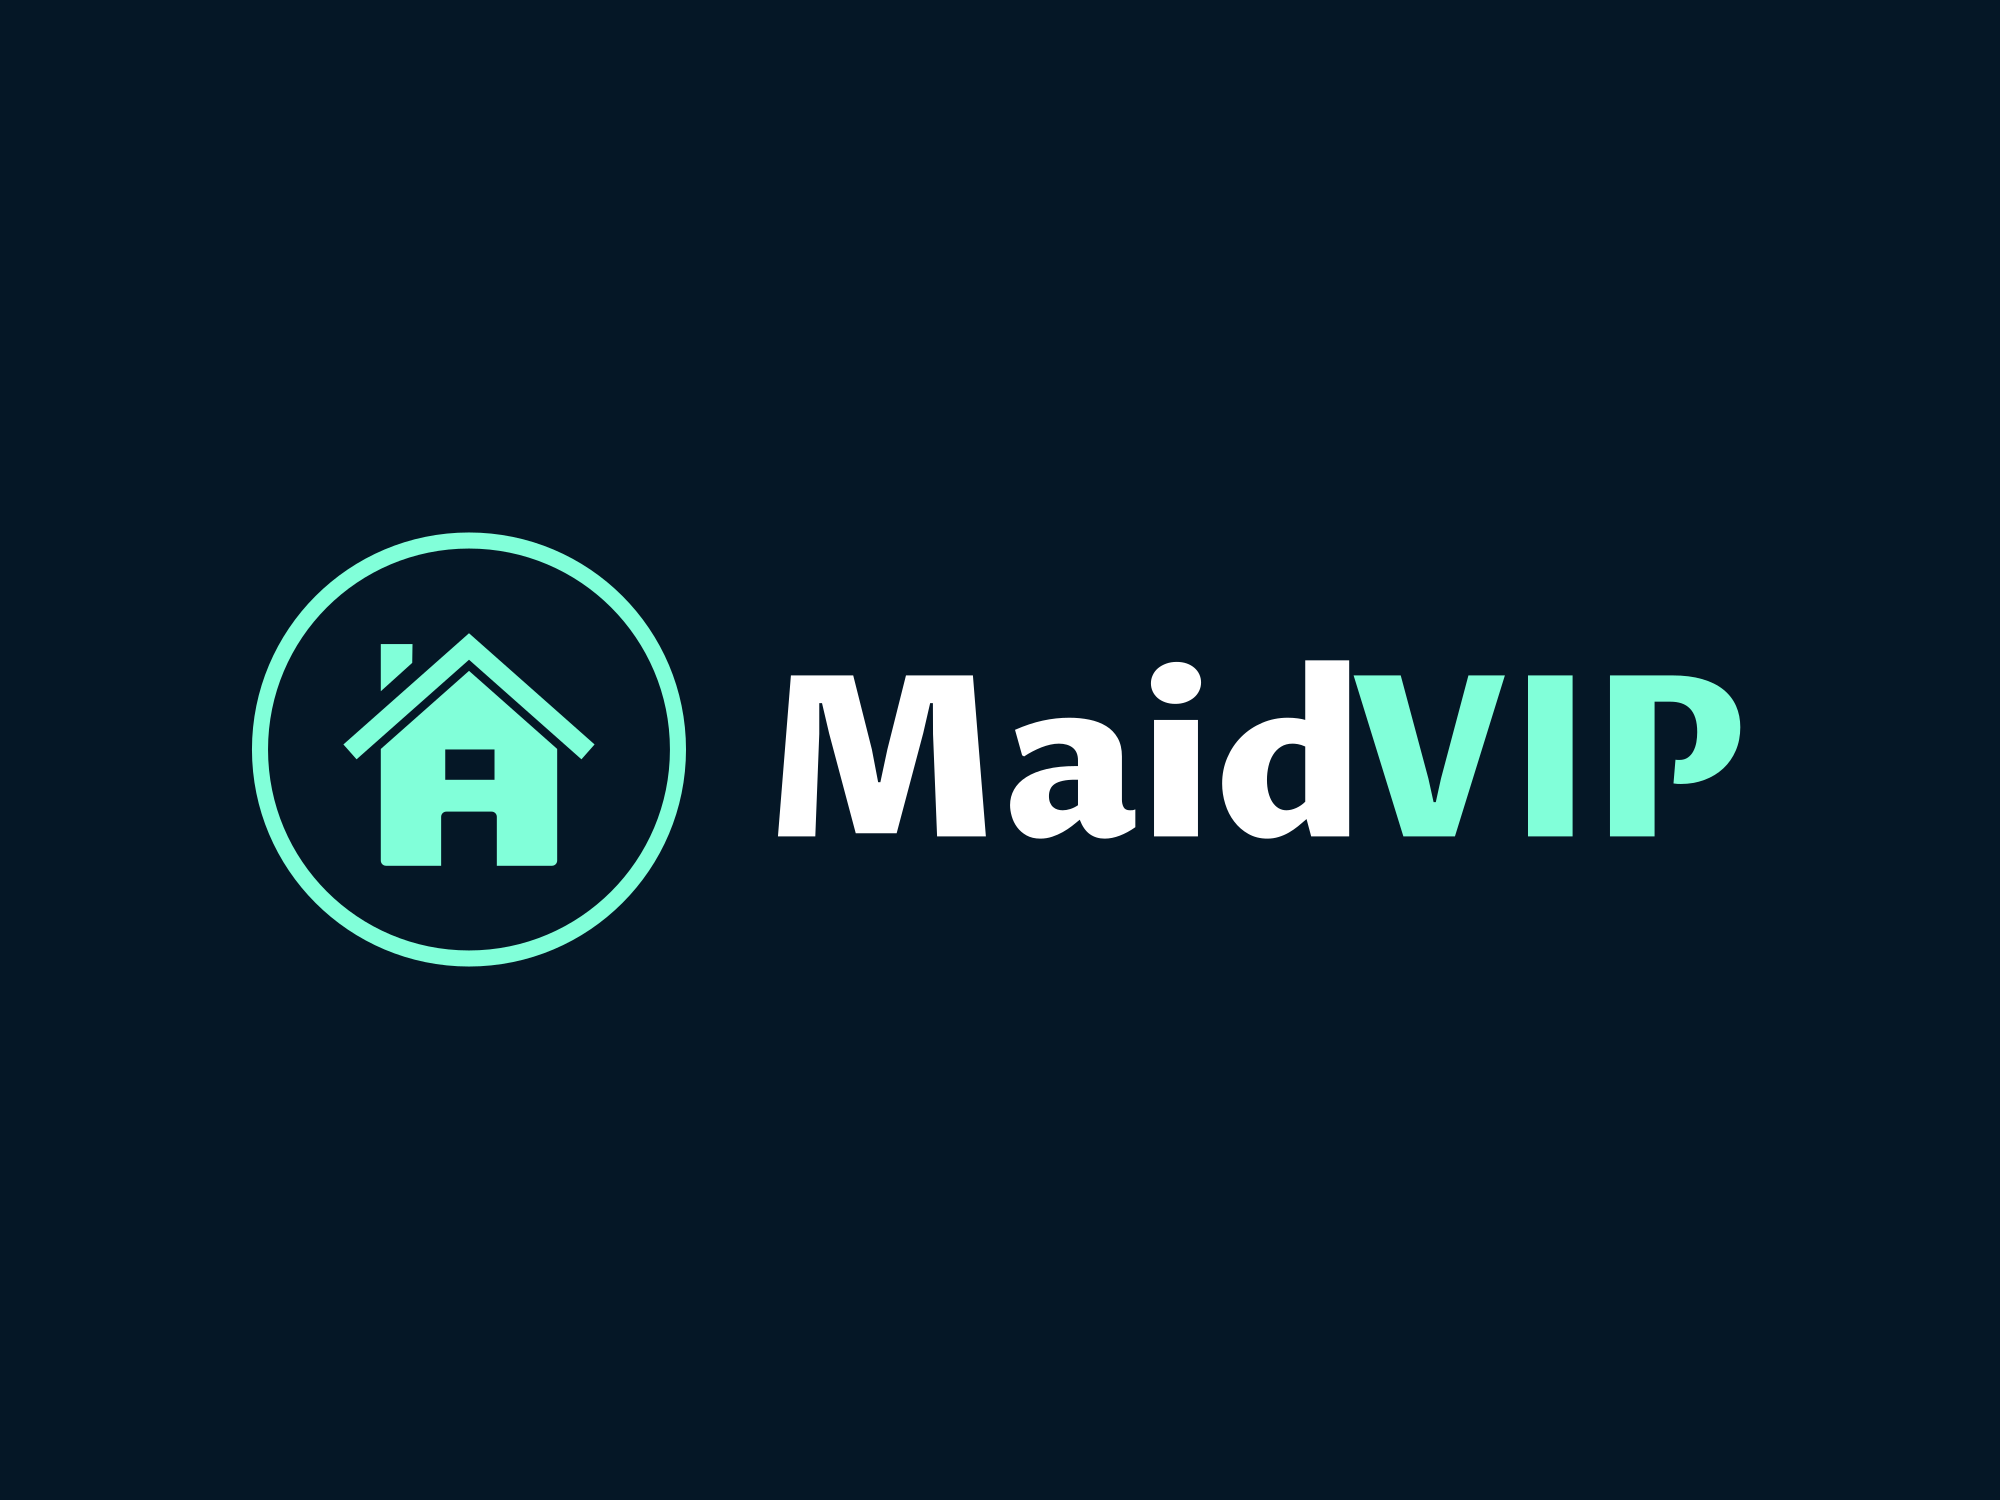 img/maid-vip-high-resolution-color-logo.png